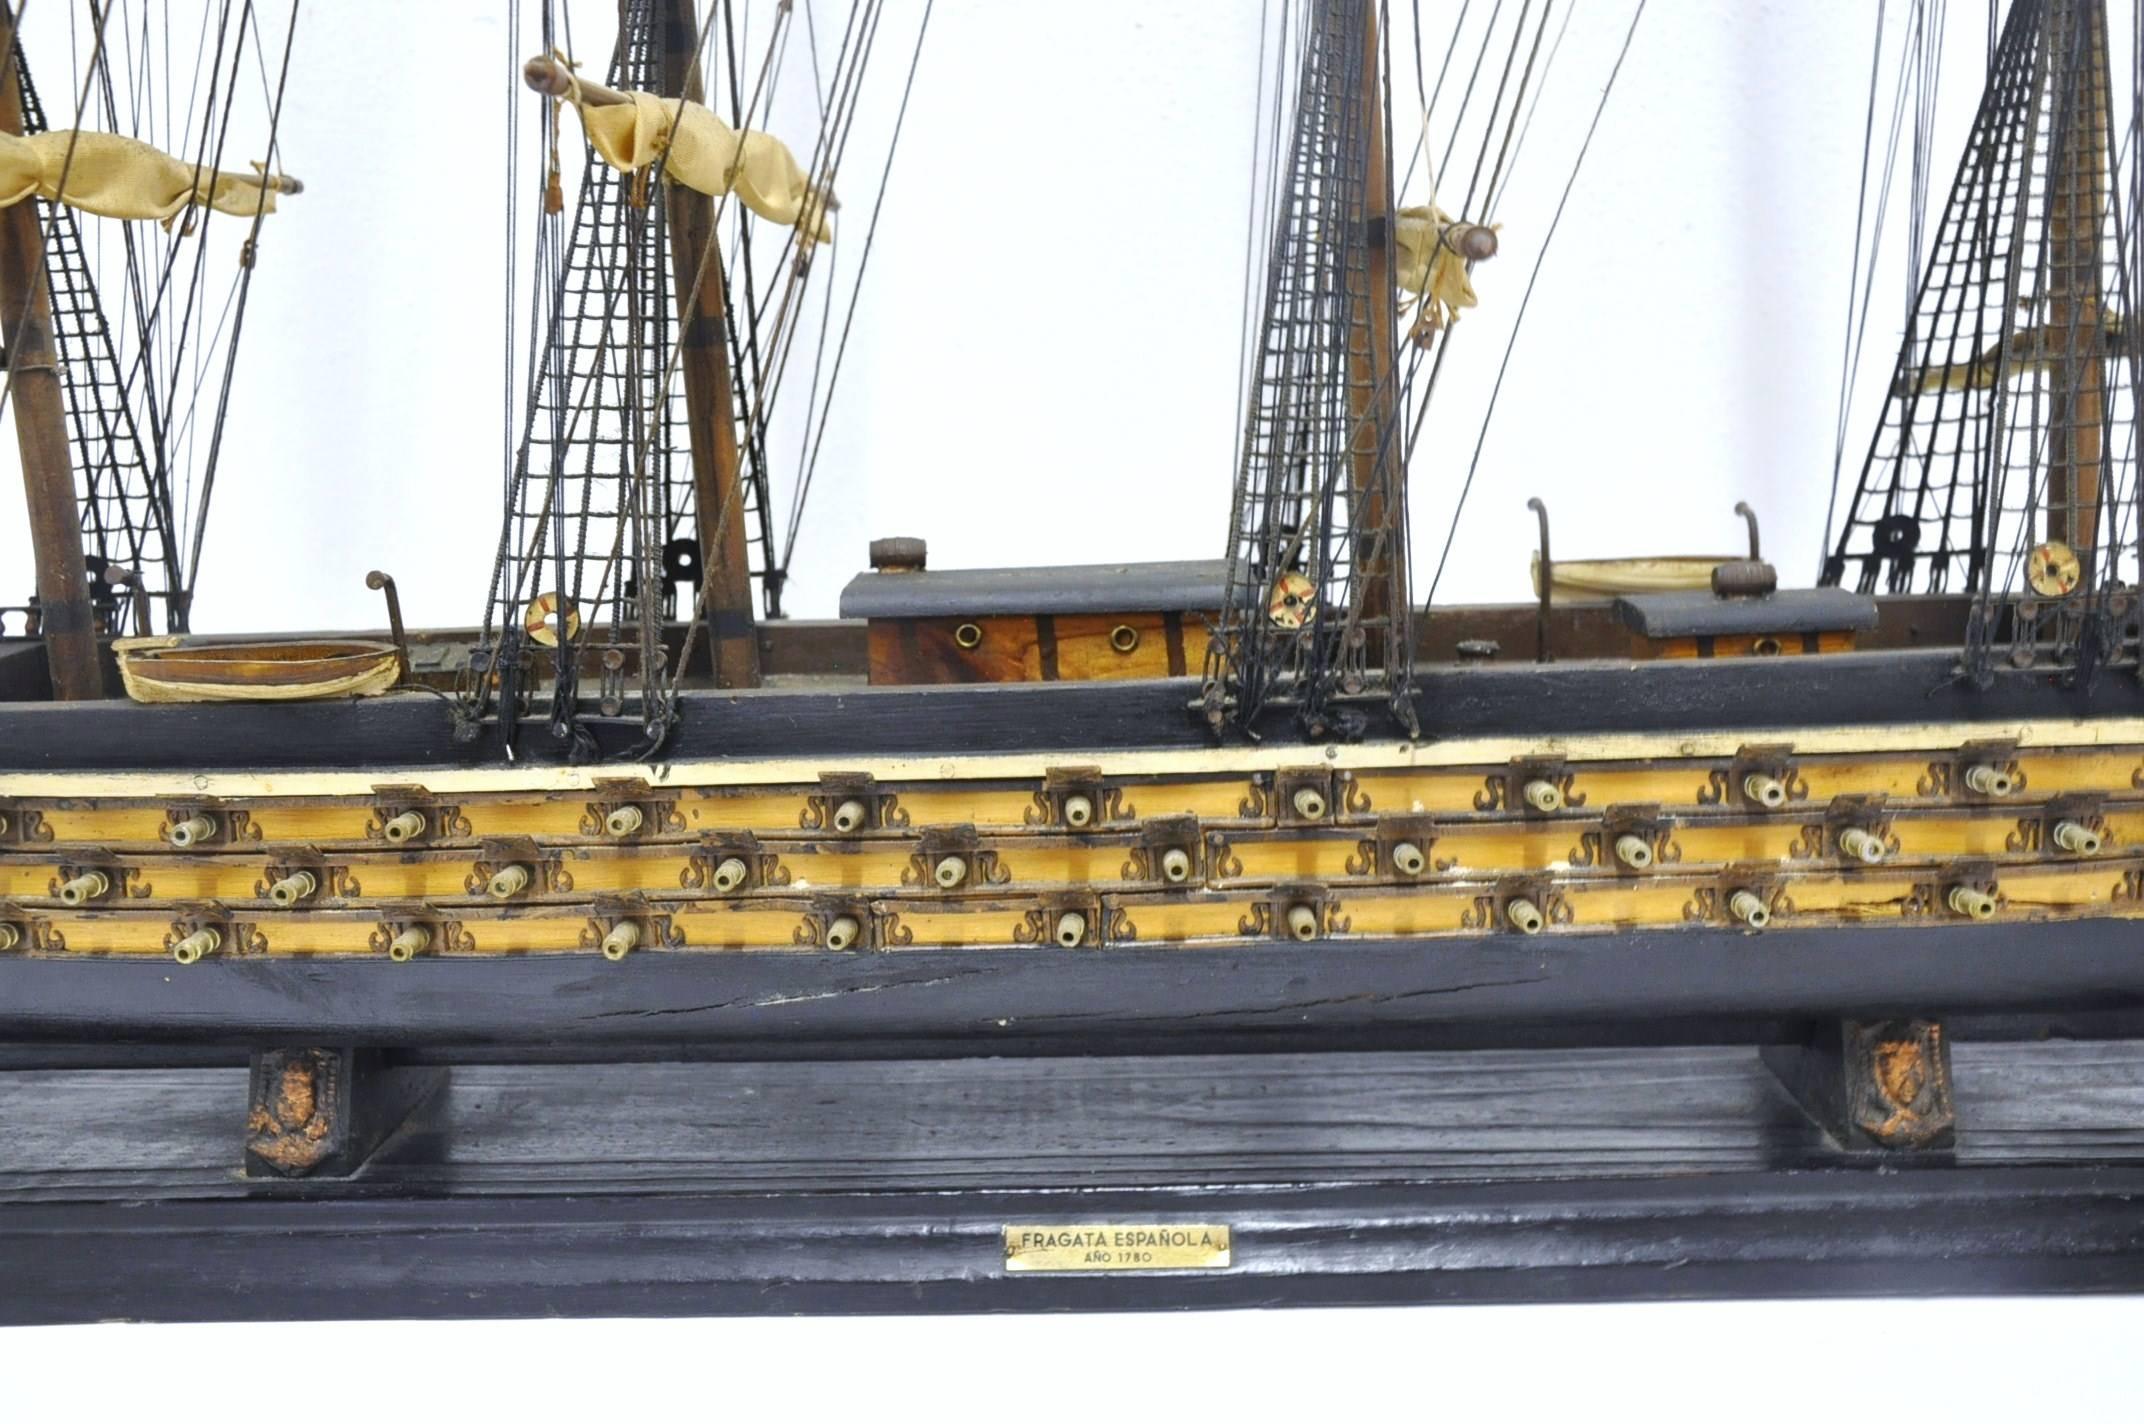 fragata espanola ano 1780 value